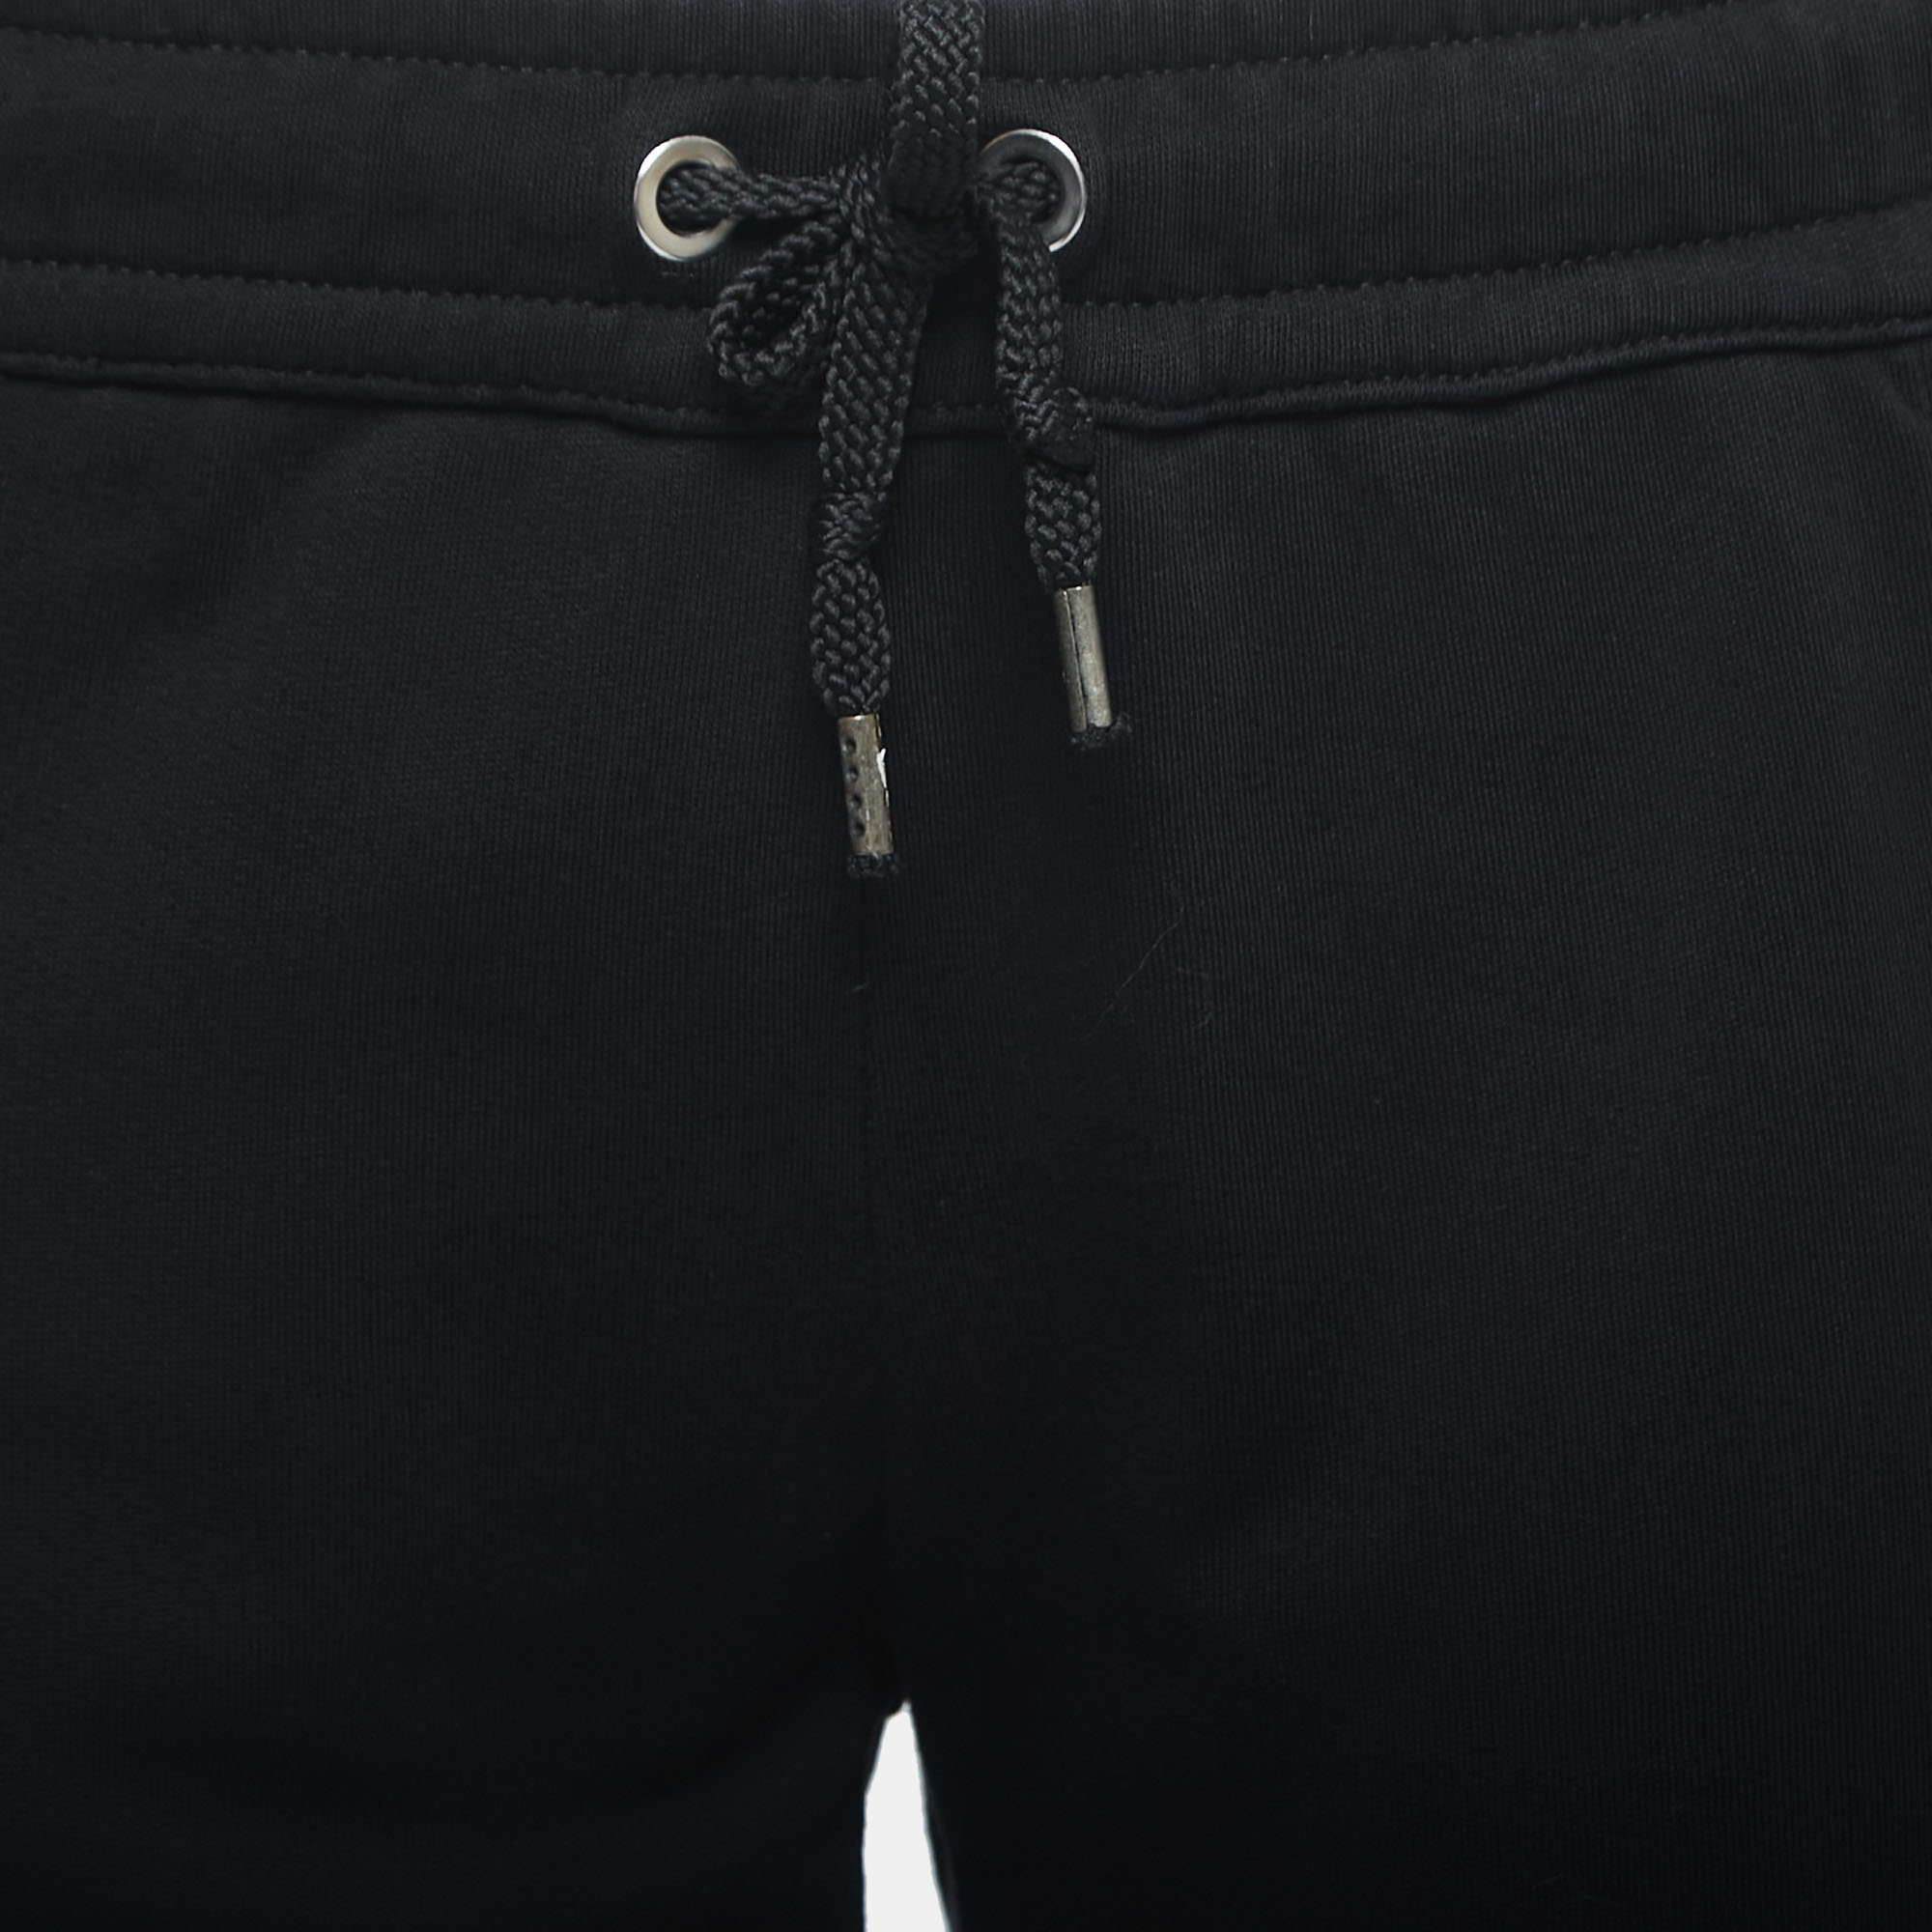 Versus Versace Black Logo Print Cotton Side Zip Detailed Joggers S